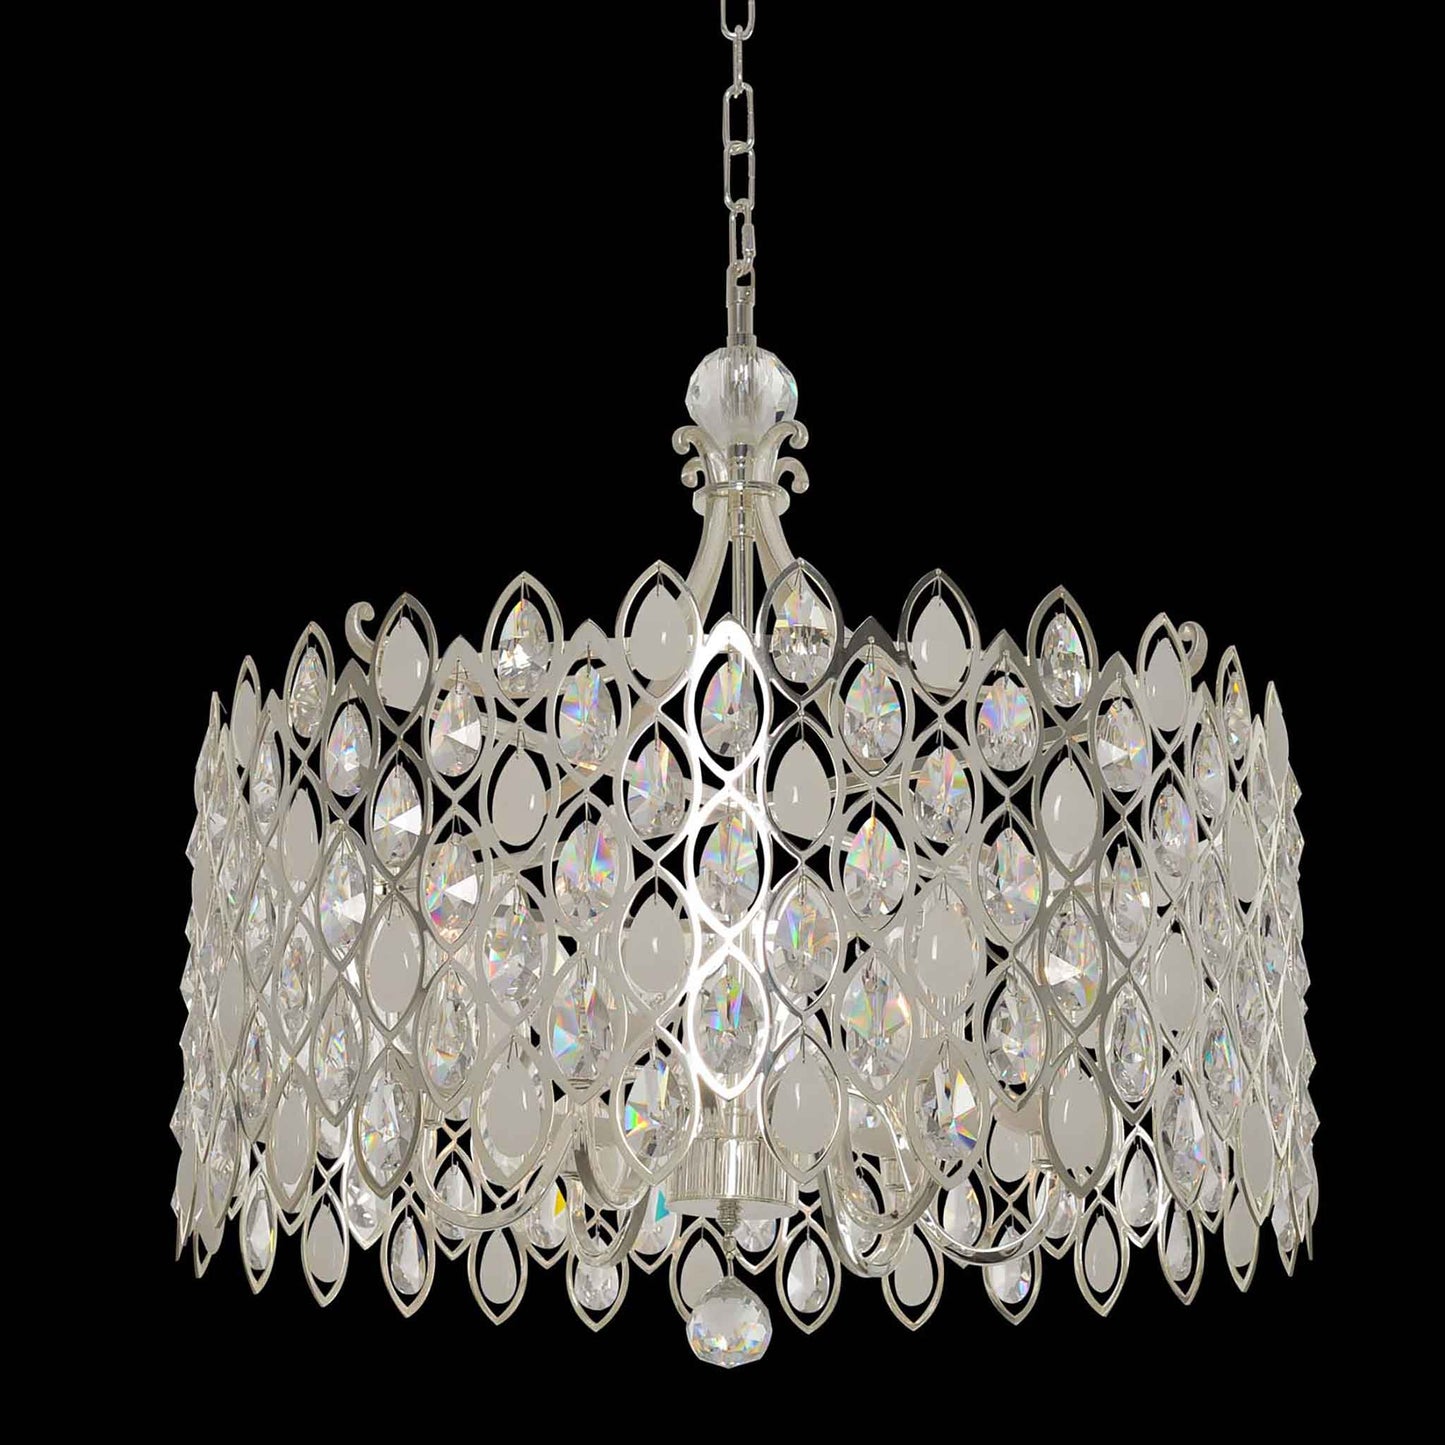 6 light 26 inch silver chandelier